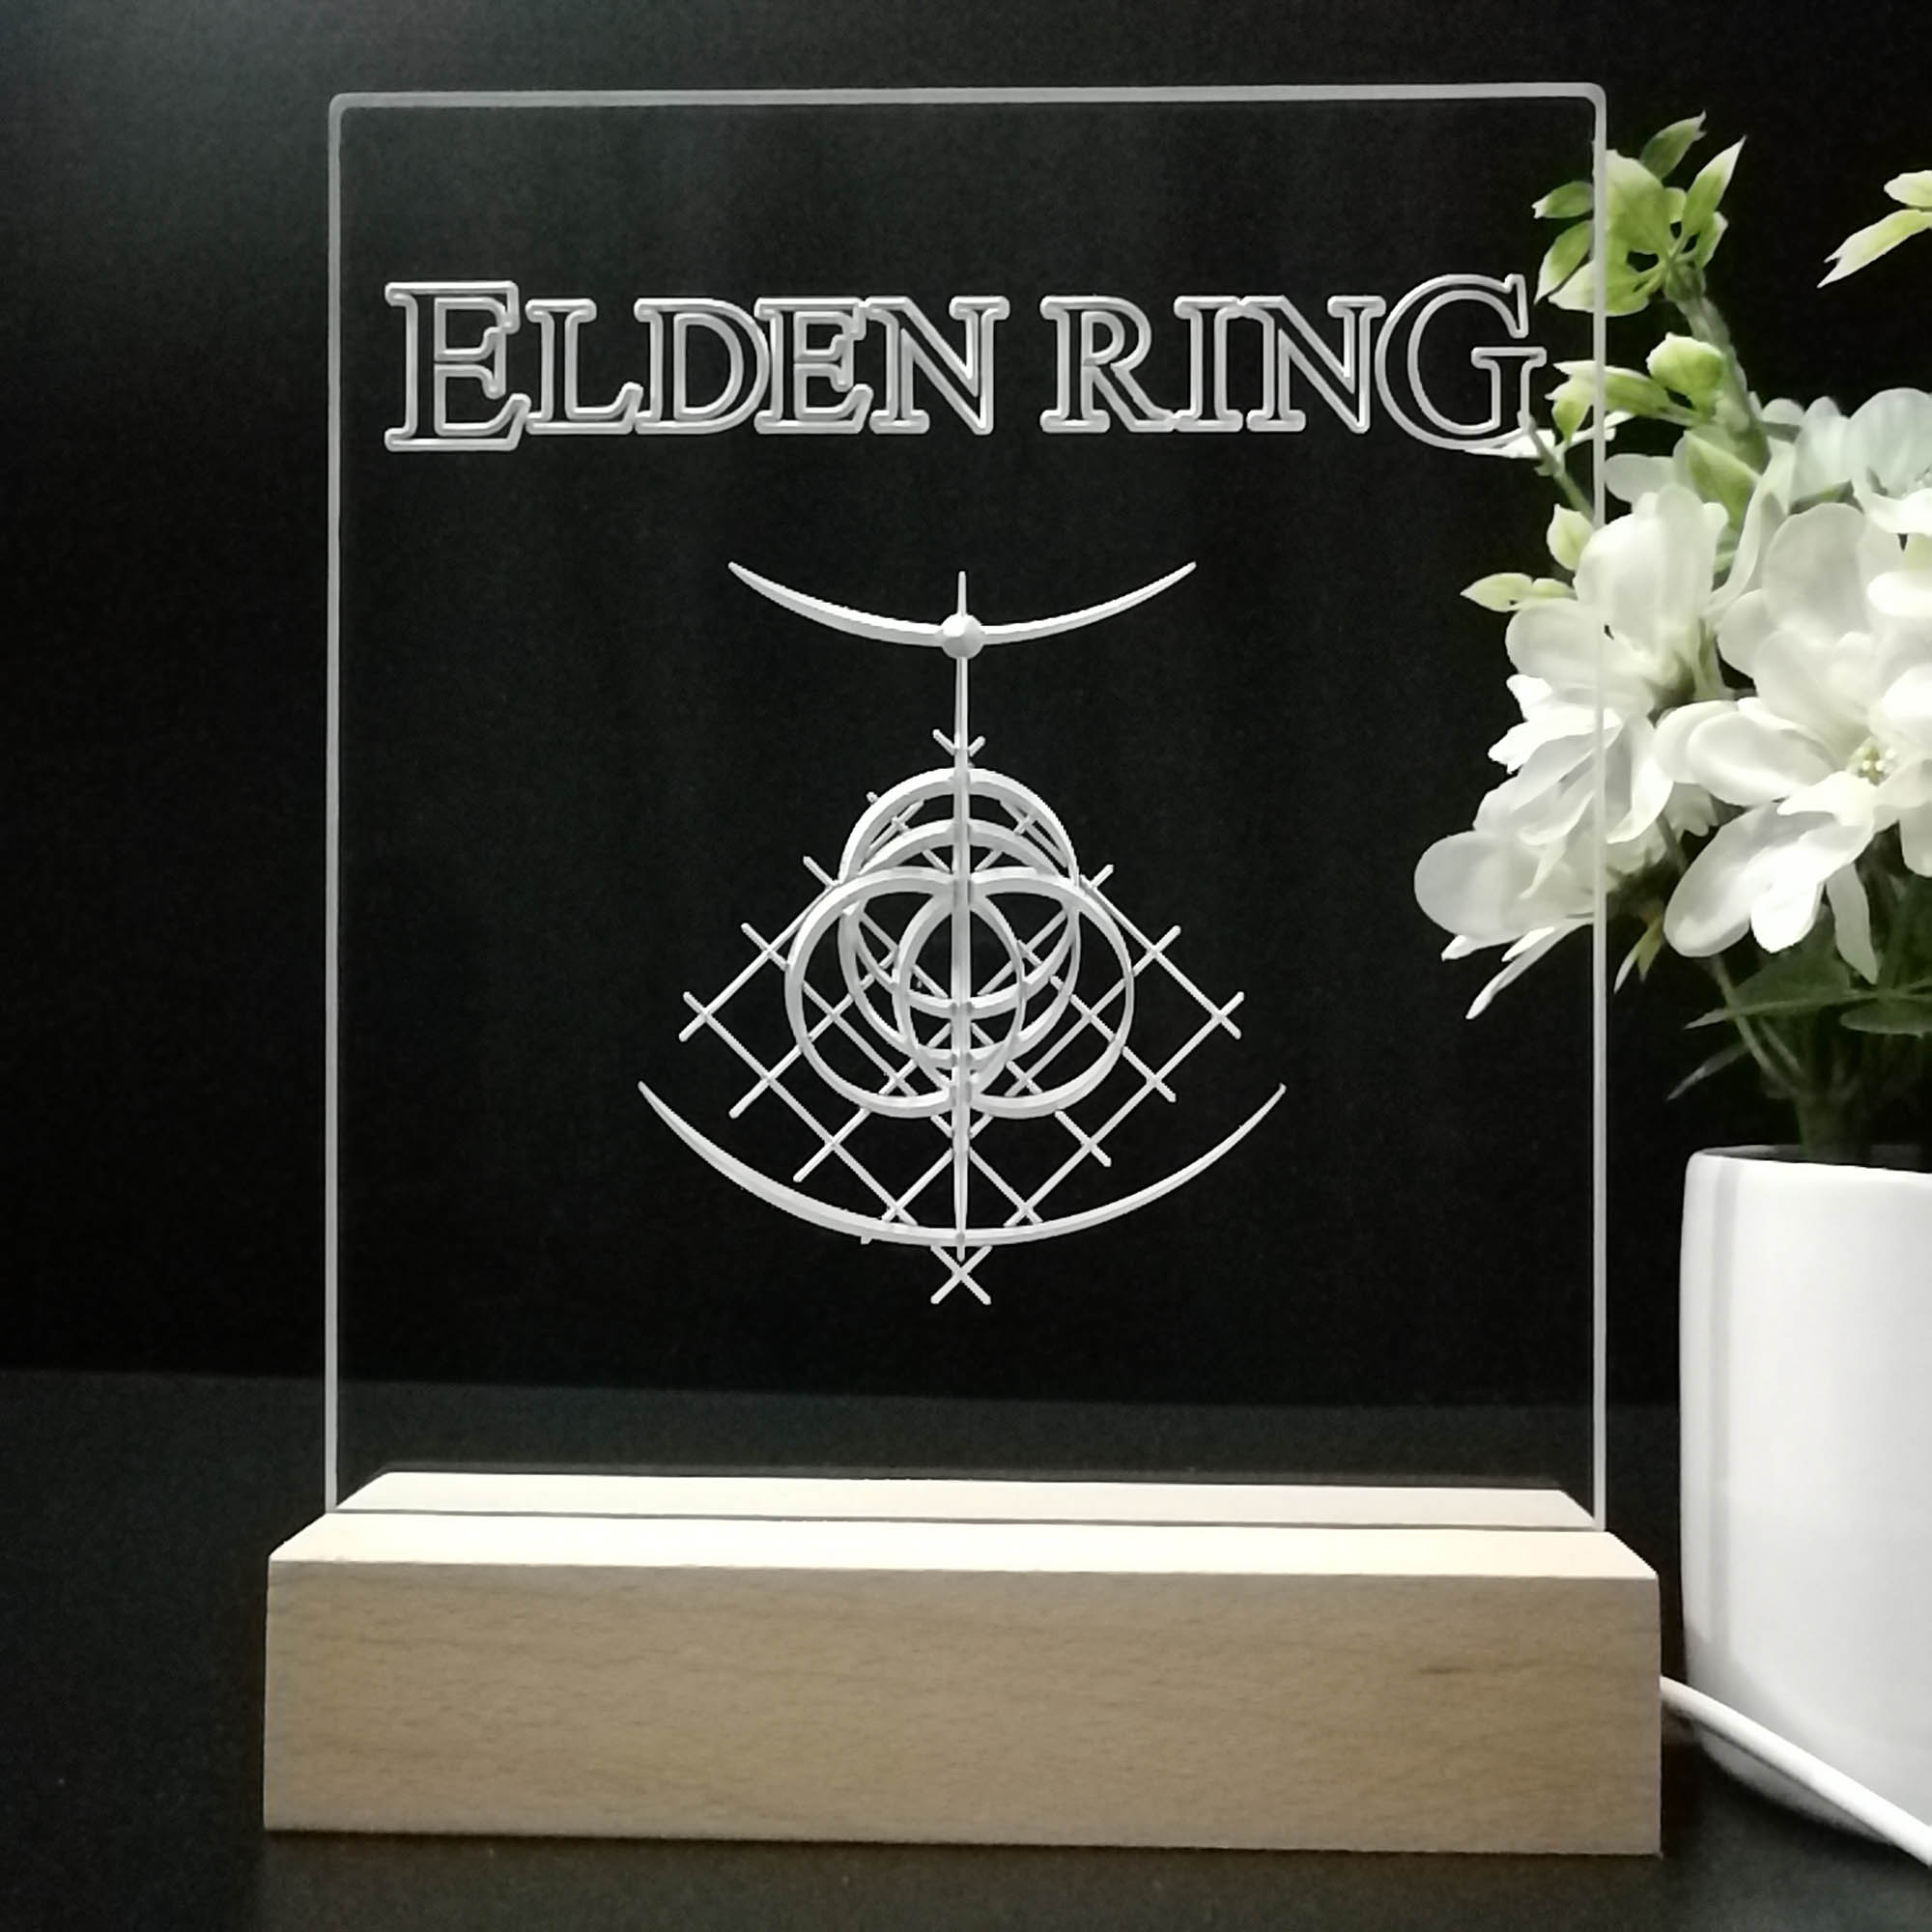 Elden Ring Game Room LED Sign Lamp Display